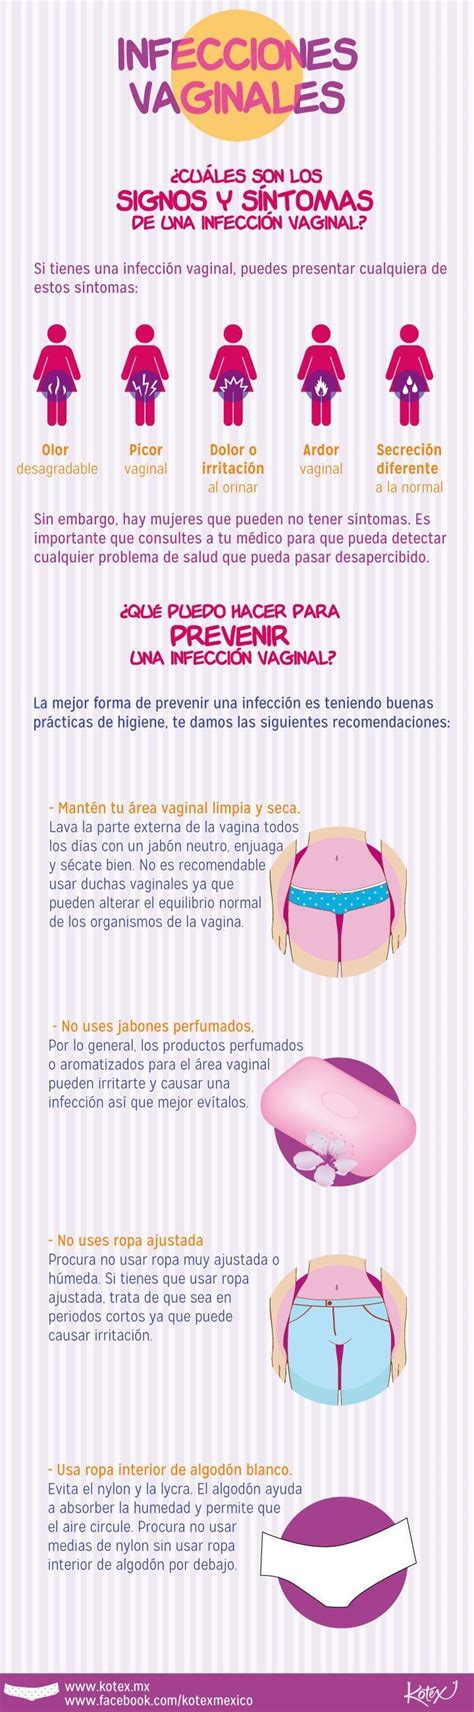 Infograf A Signos Y S Ntomas De La Infecci N Vaginal Infografia Salud